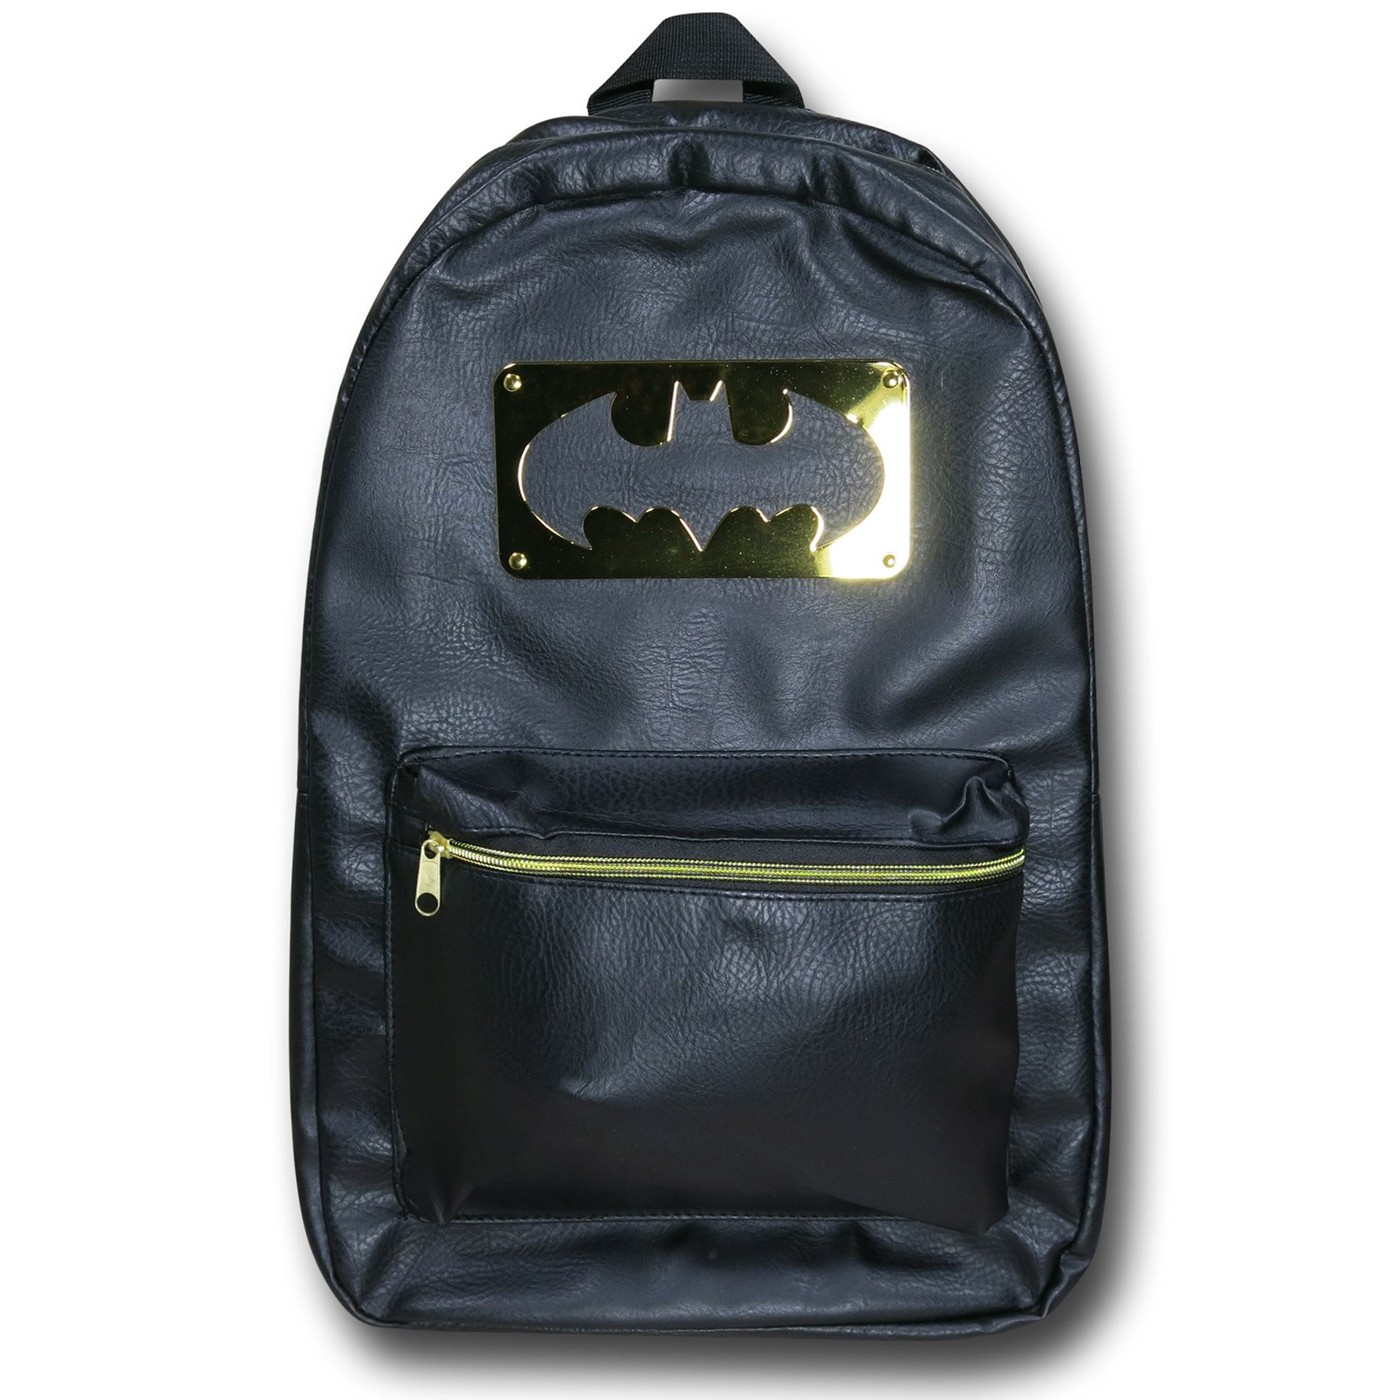 Batman Bag, Metal Plate Backpack, Black